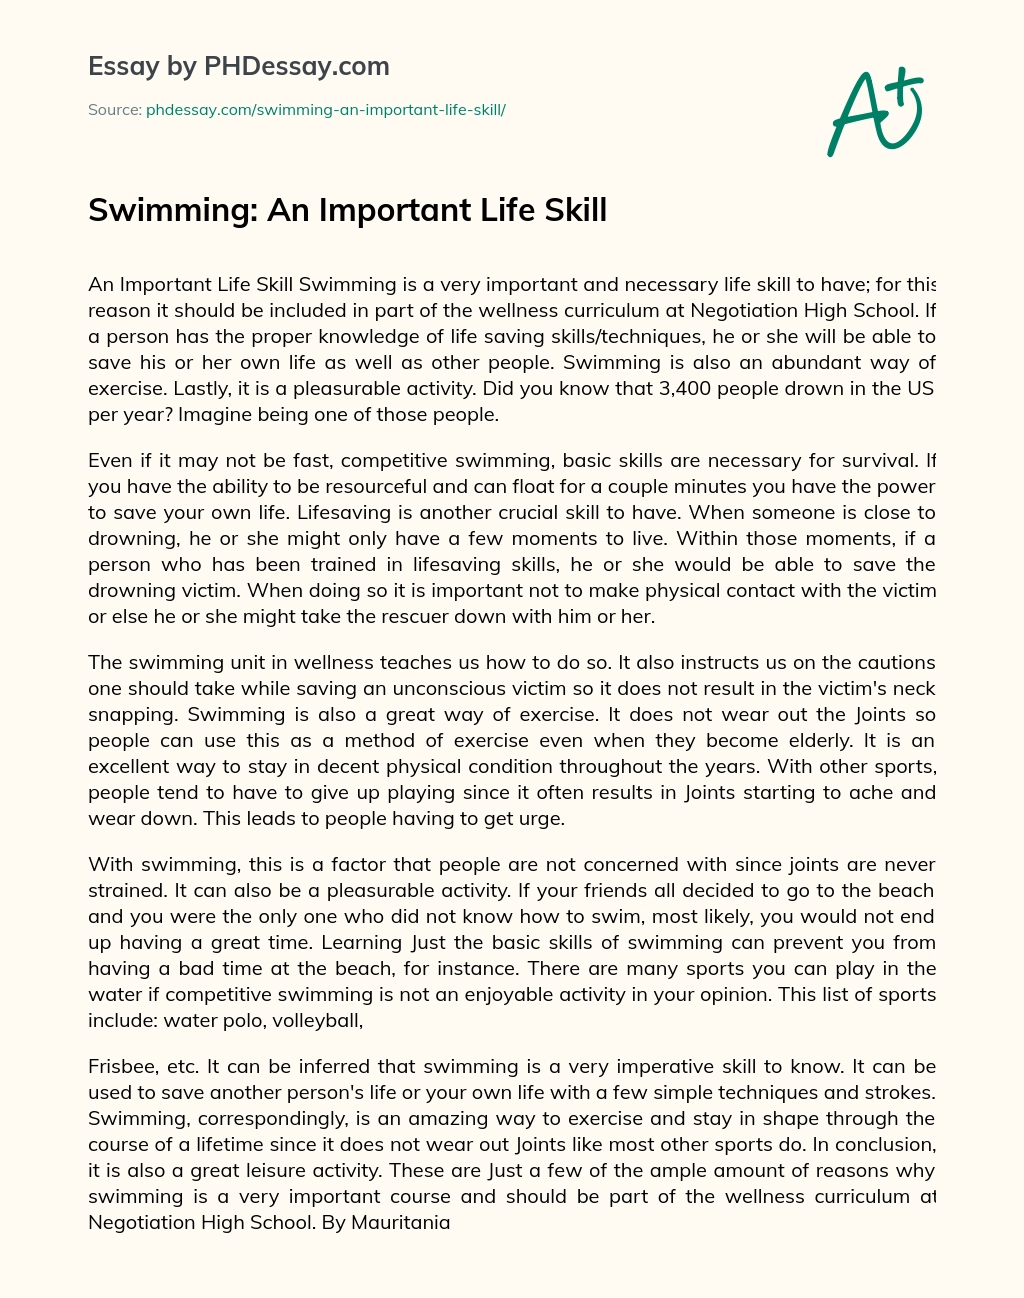 Swimming: An Important Life Skill essay